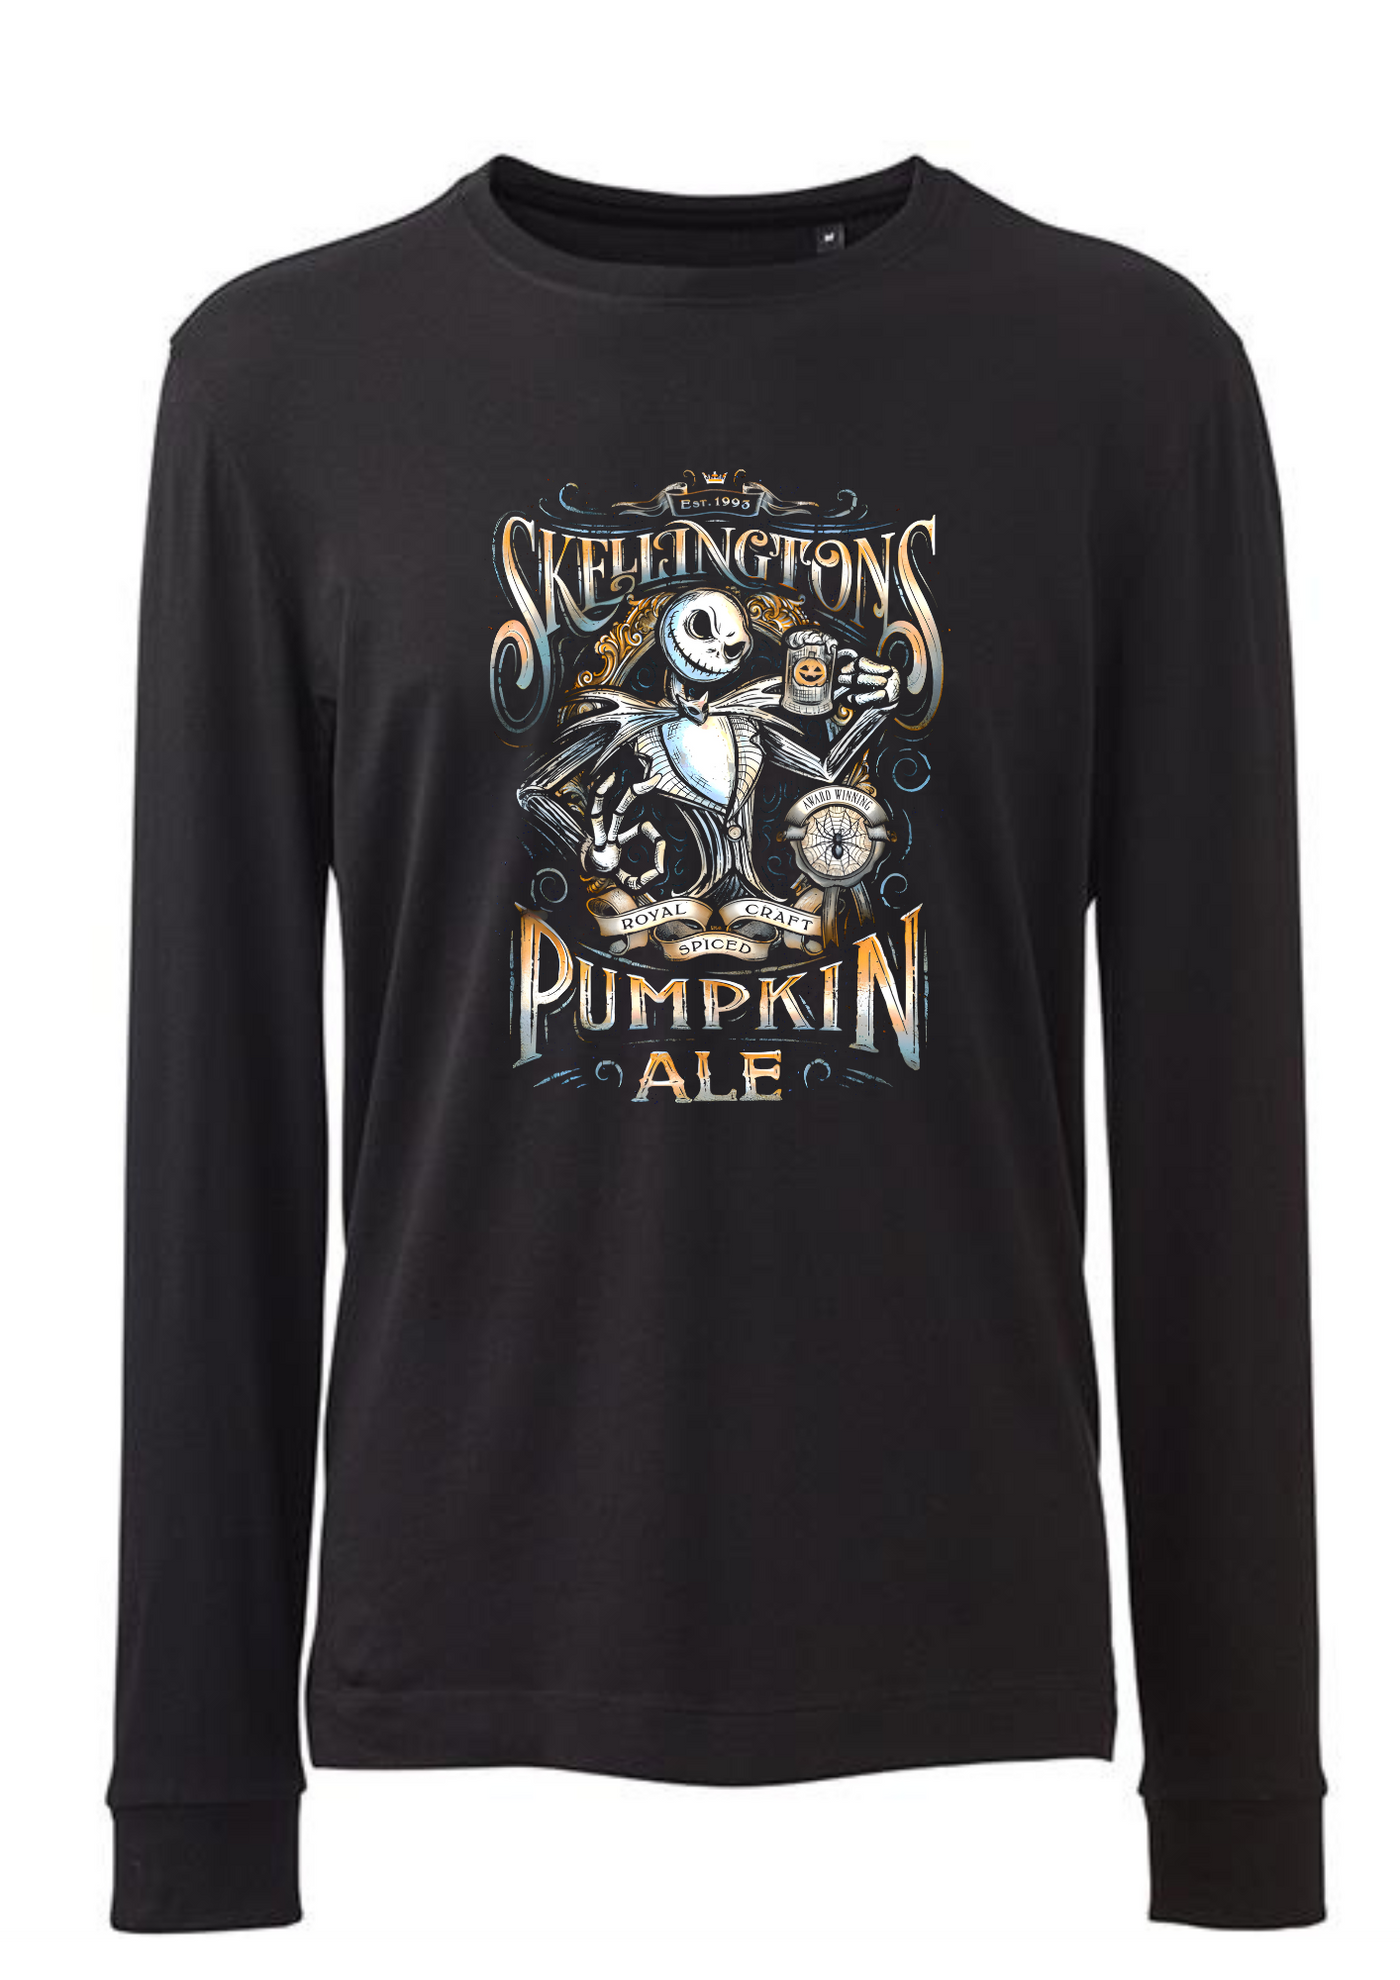 Black Long Sleeved Skellingtons Pumpkin Ale Unisex Slogan T-Shirt